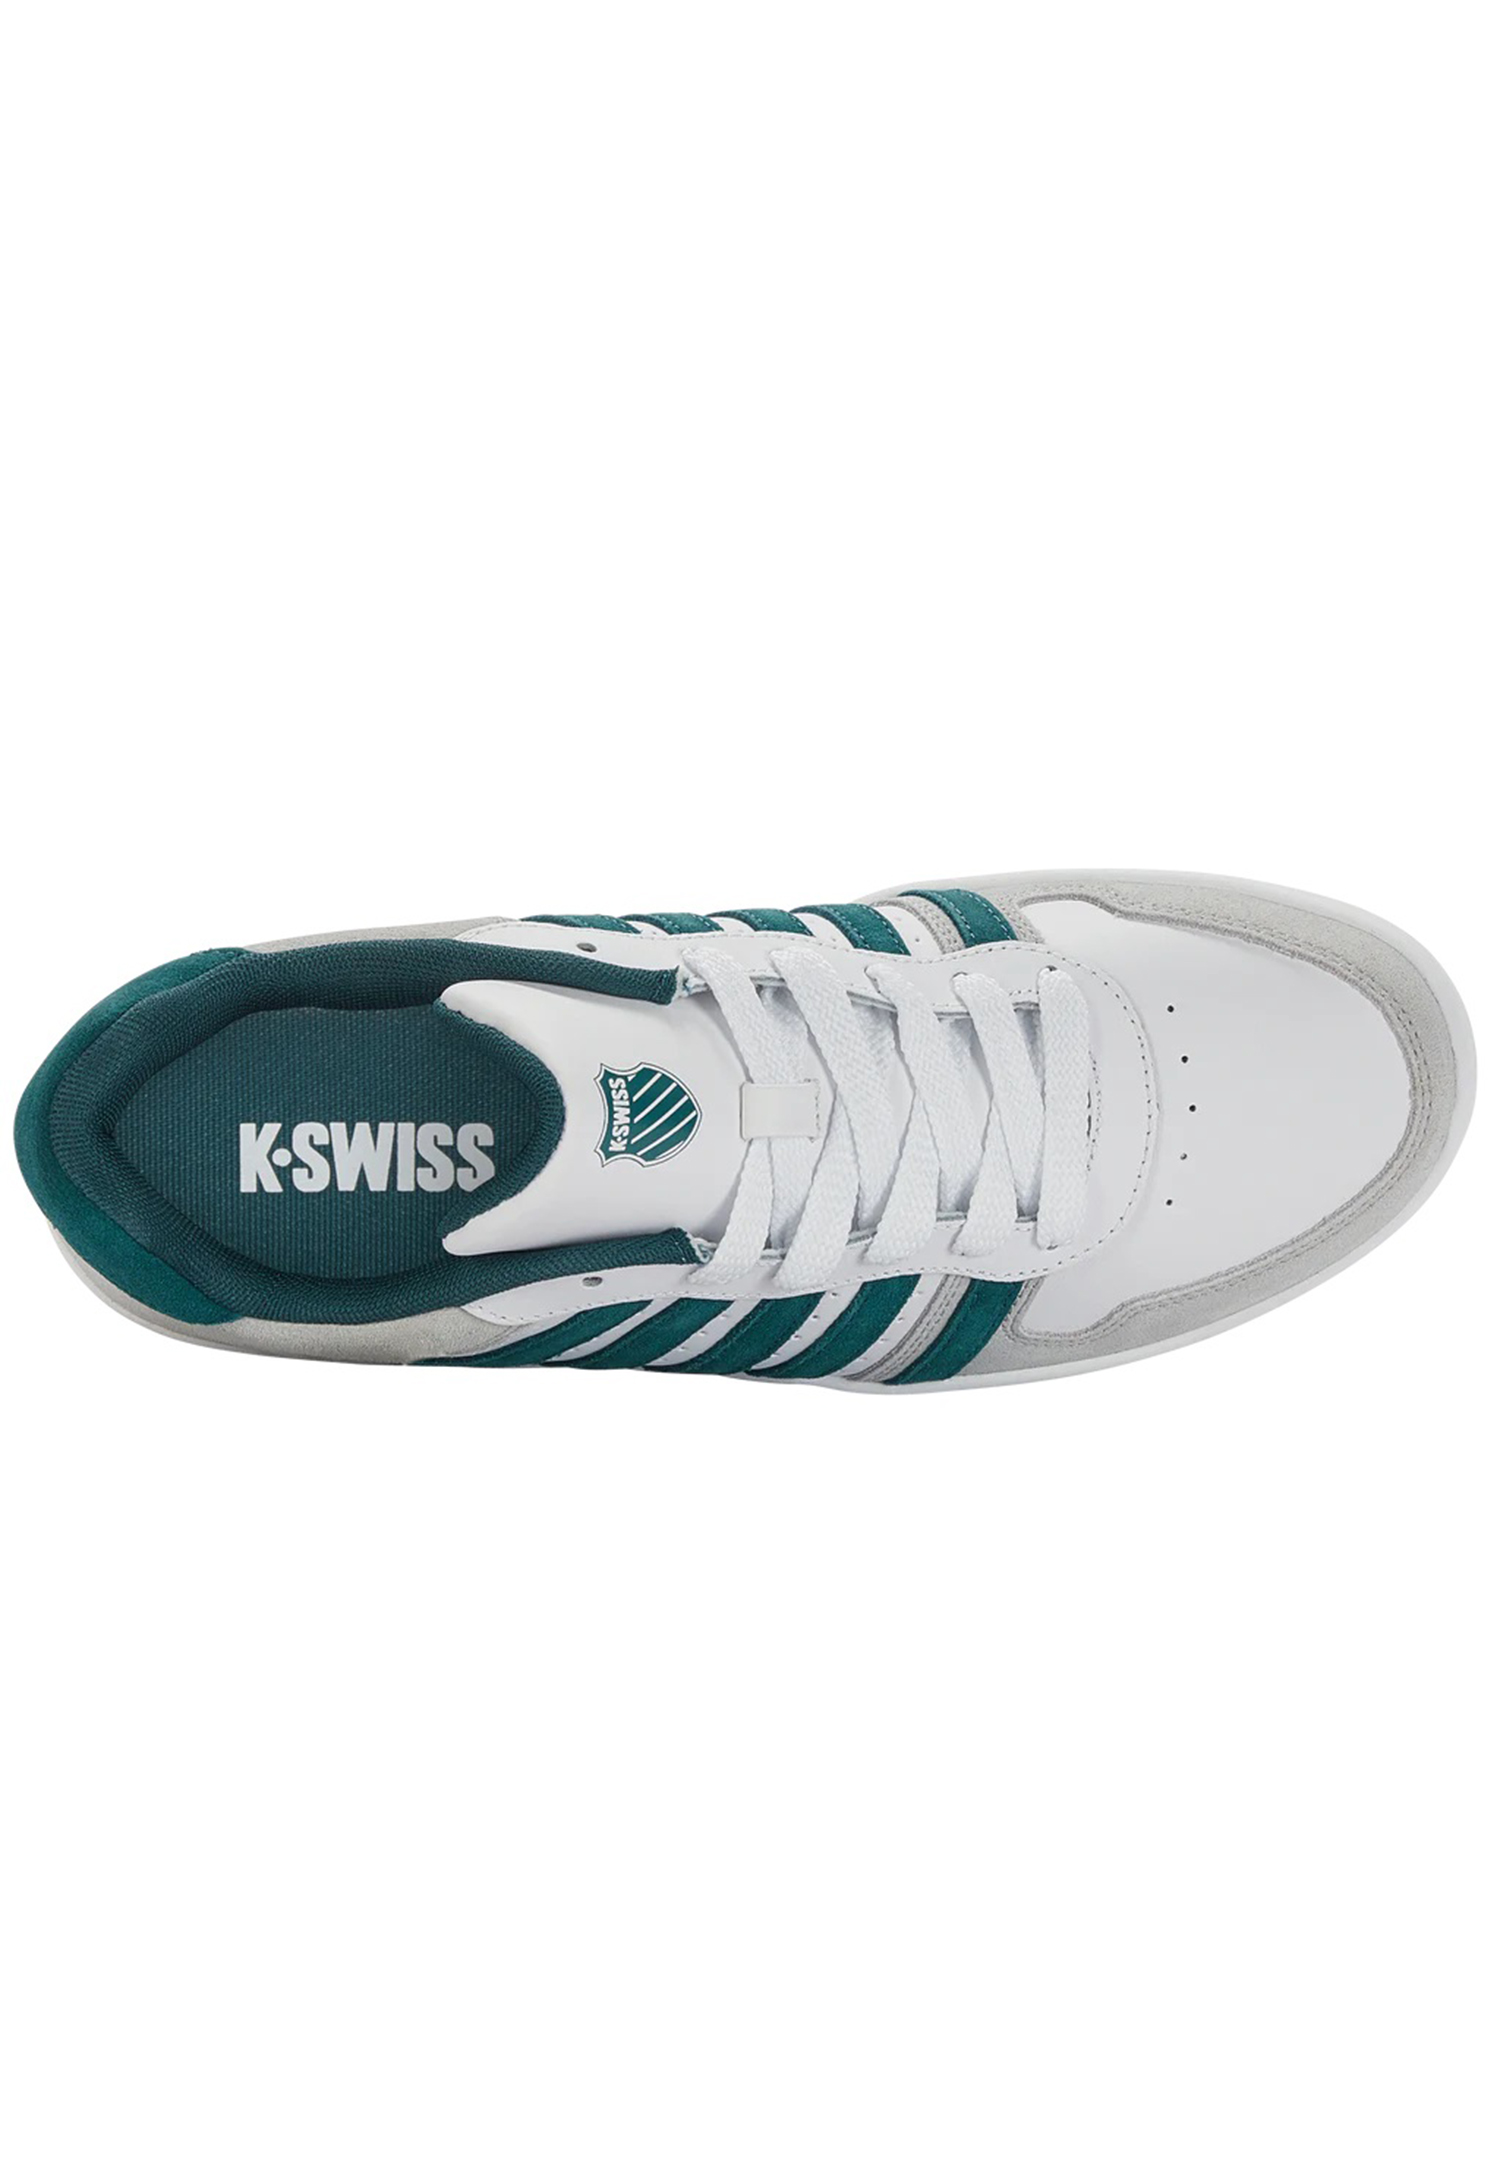 K-SWISS Court Palisades Herren Sneaker Sportschuhe 06931-942-M mehrfarbig